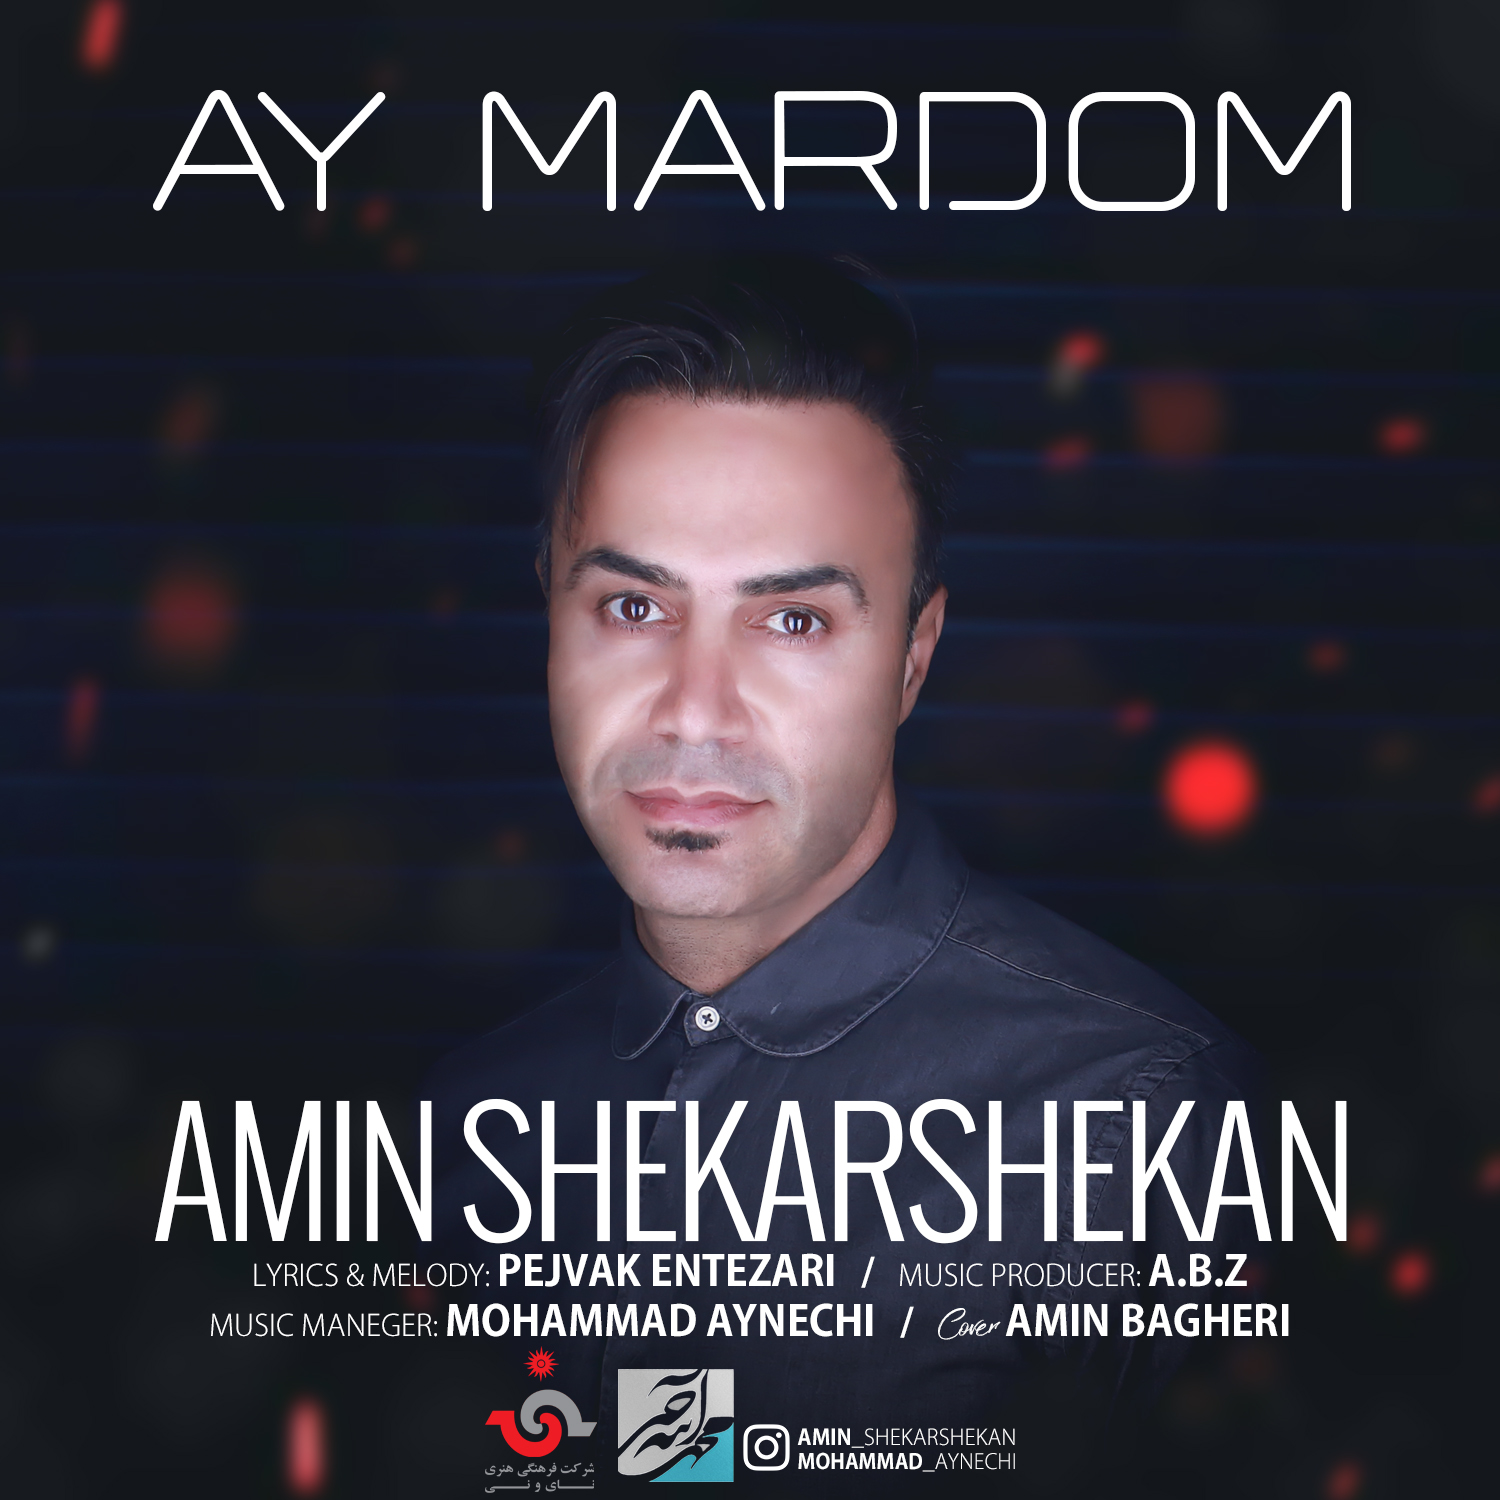  دانلود آهنگ جدید امین شکرشکن - ای مردم | Download New Music By Amin ShekarShekan - Ay Mardom